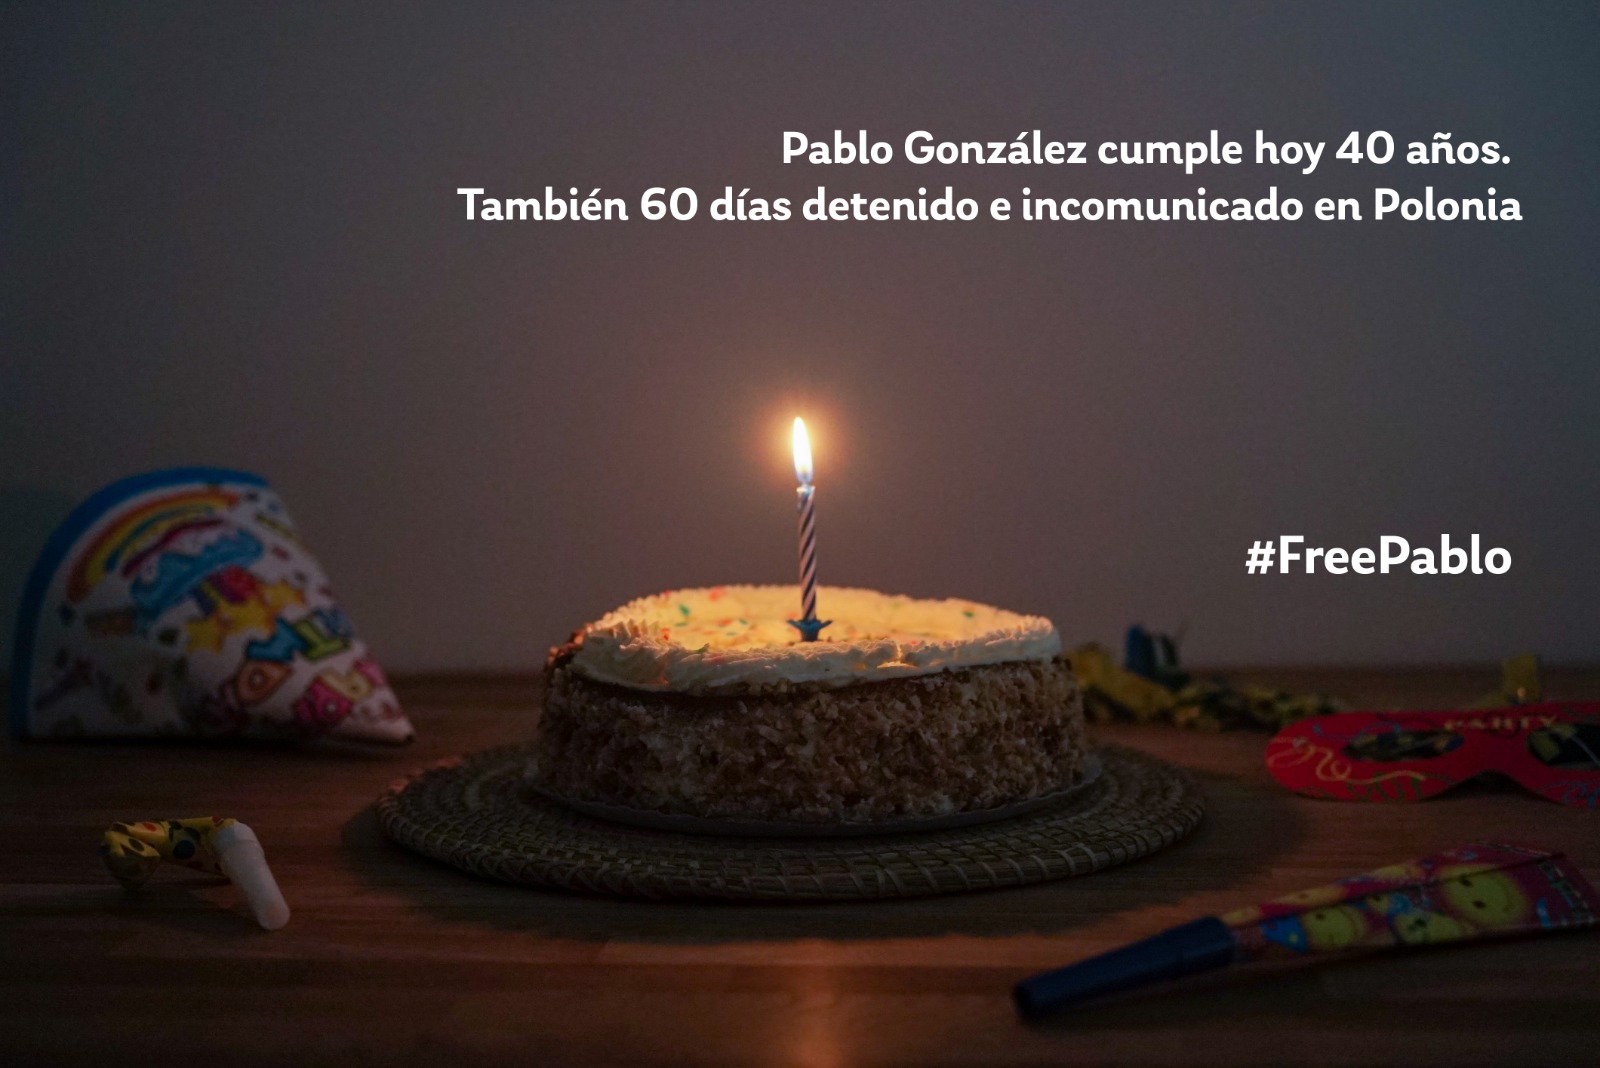 Pablo González cumple hoy 40 años también 60 días detenido e incomunicado en Polonia